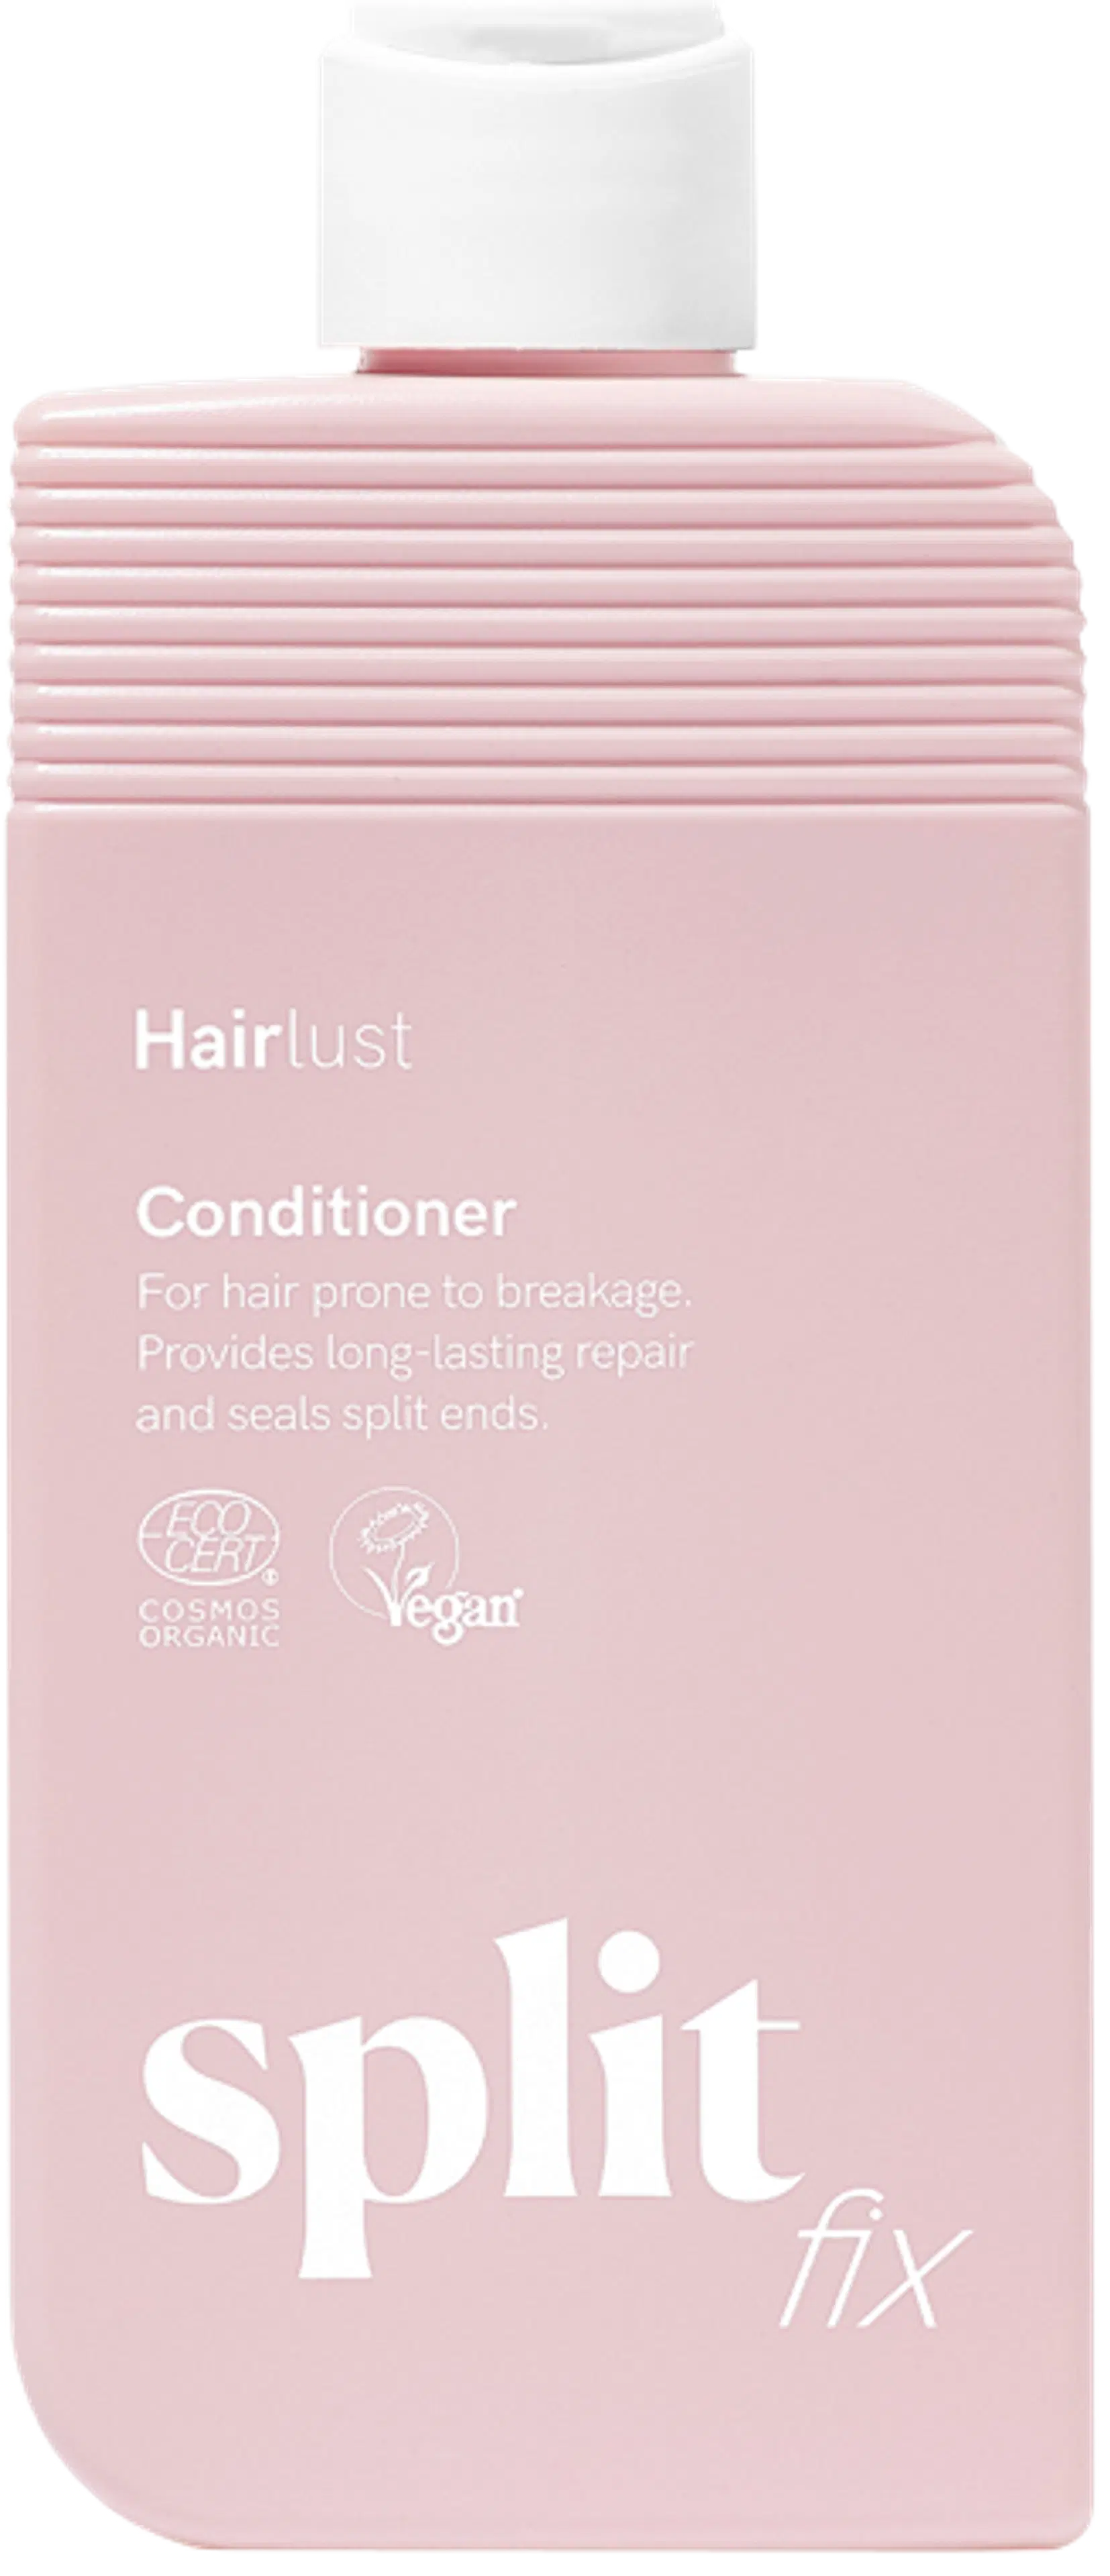 Hairlust Split Fix Conditioner hoitoaine 250 ml